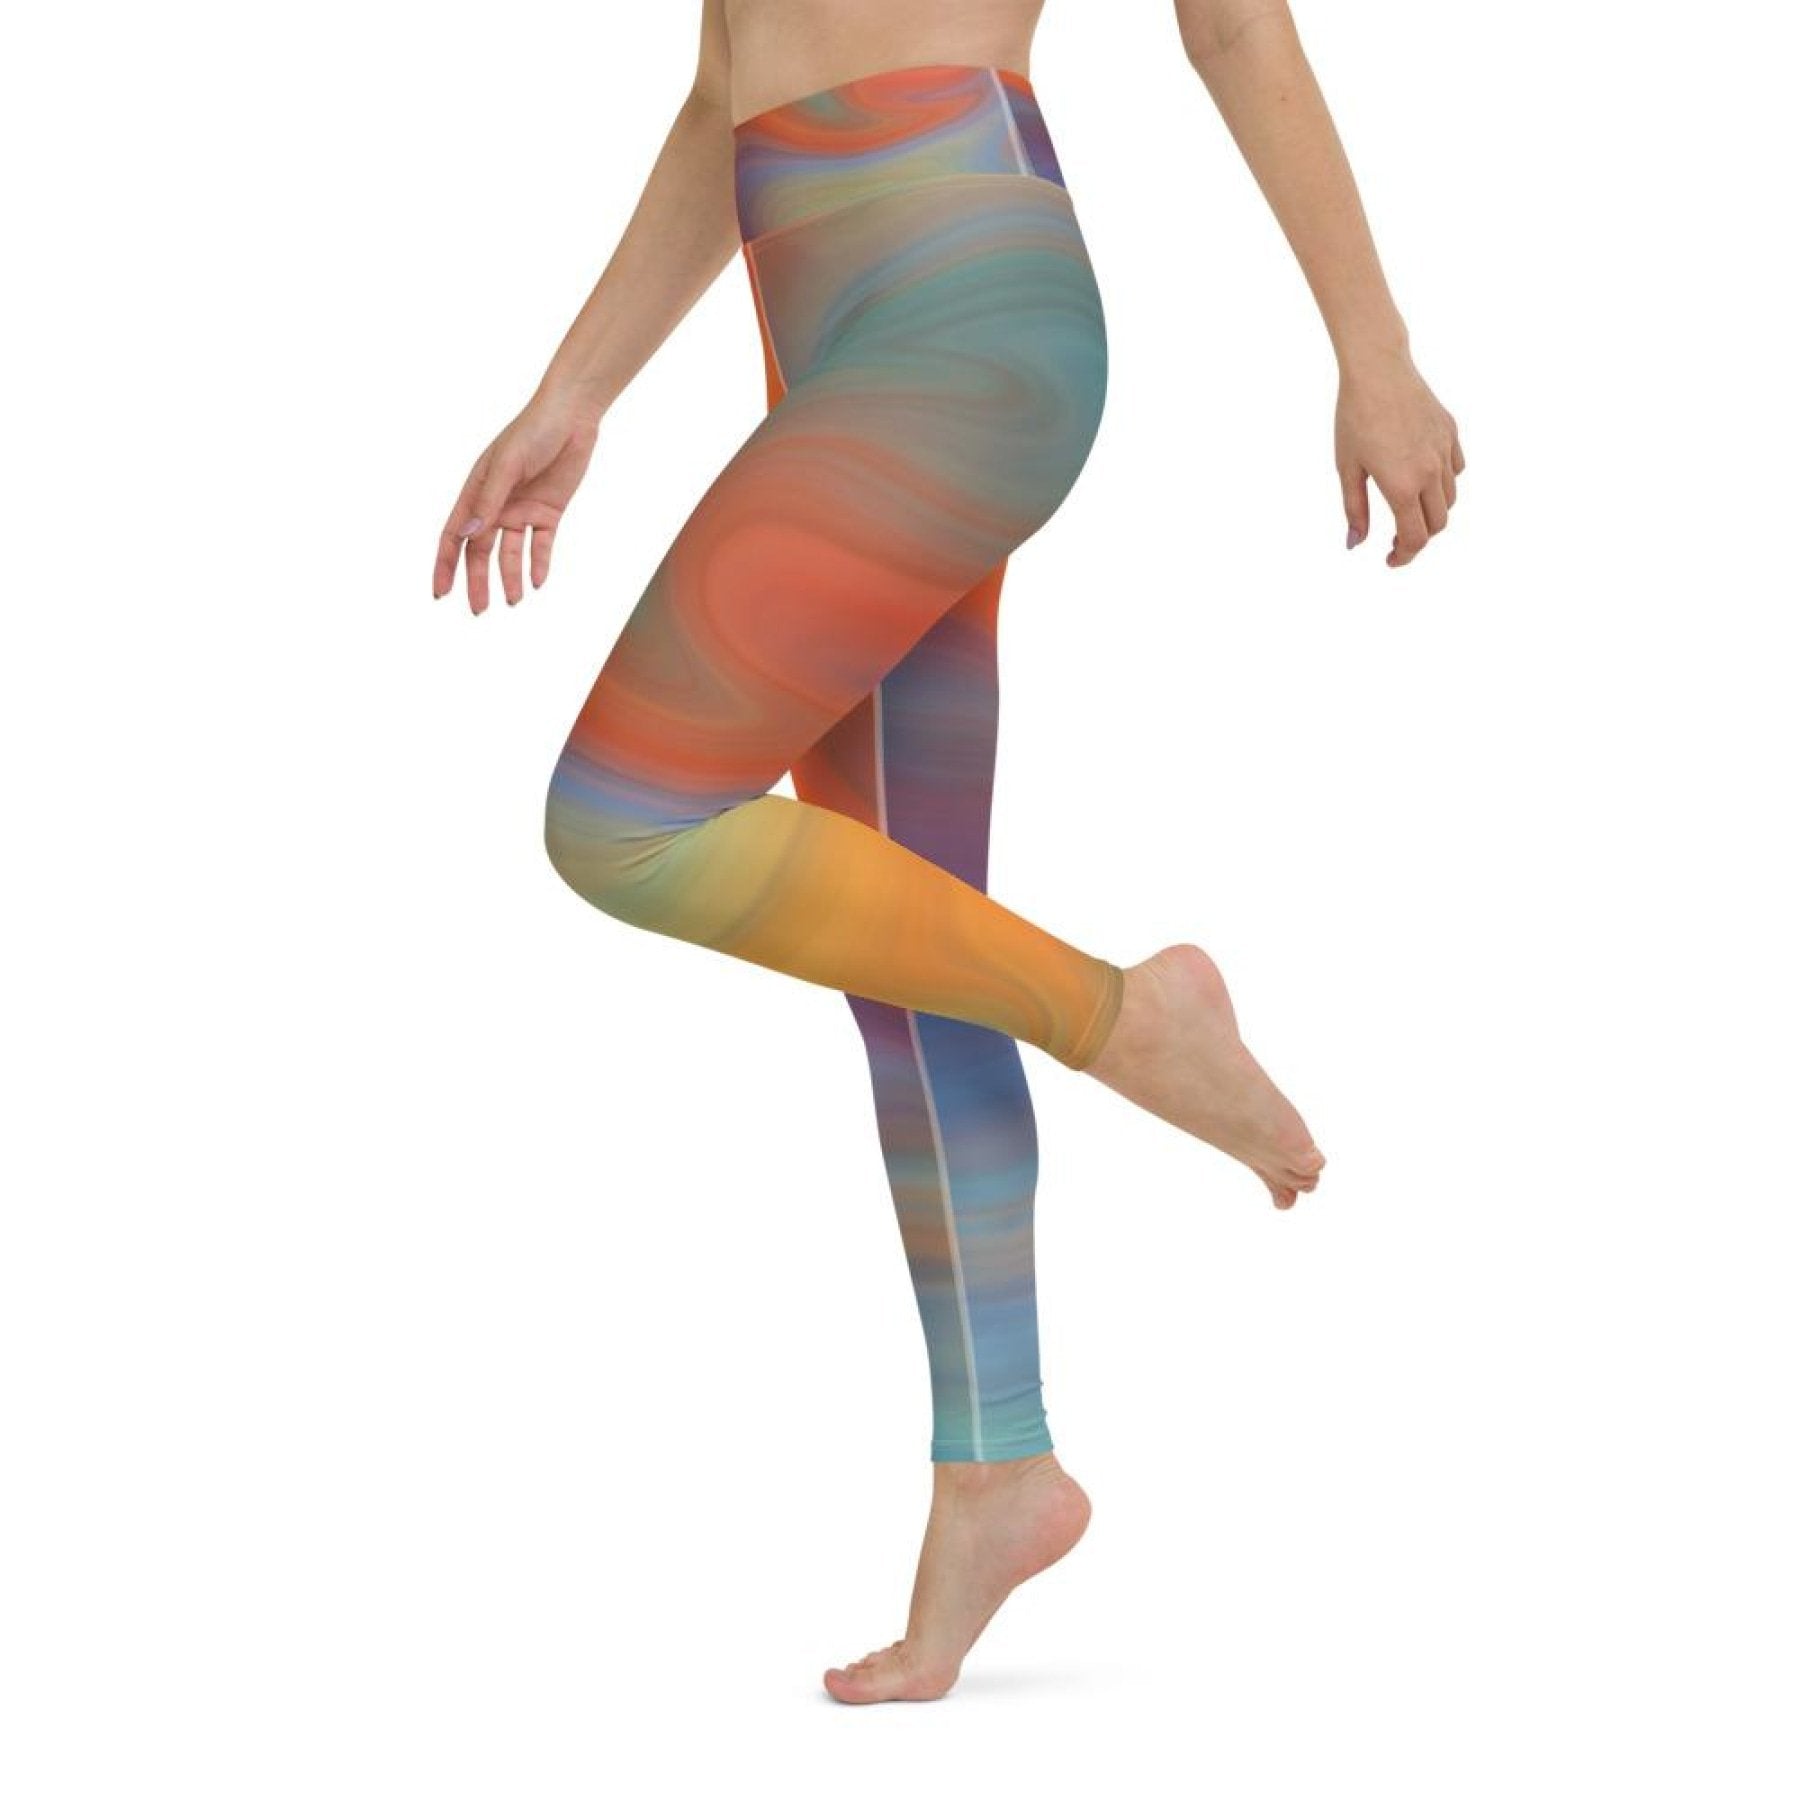 Womens Leggings - Orange Swirl White Seam High Waist Fitness Yoga Pants